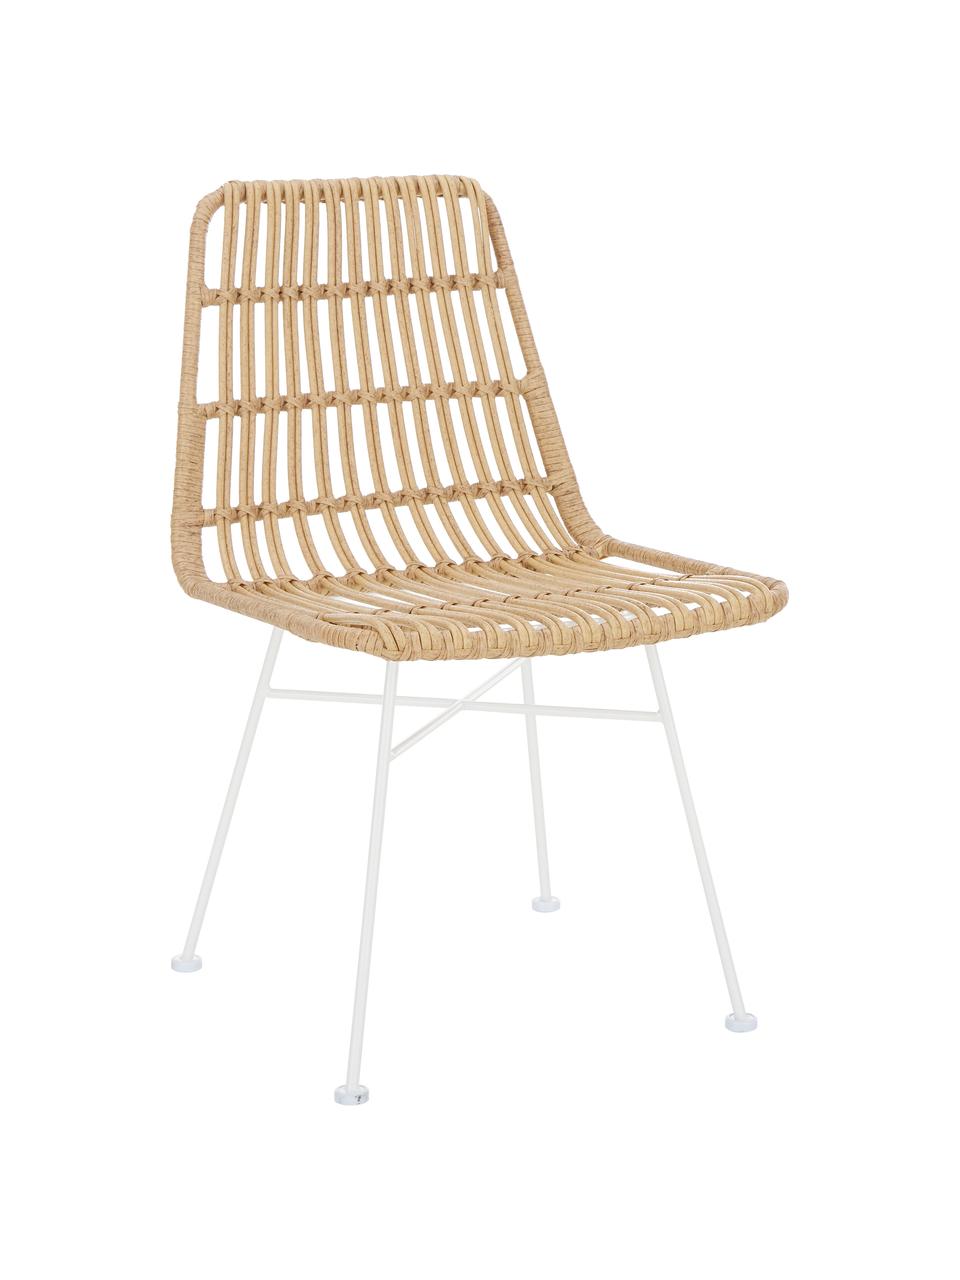 Polyratanové židle Costa, 2 ks, Světle hnědá, bílá, Š 47 cm, H 61 cm